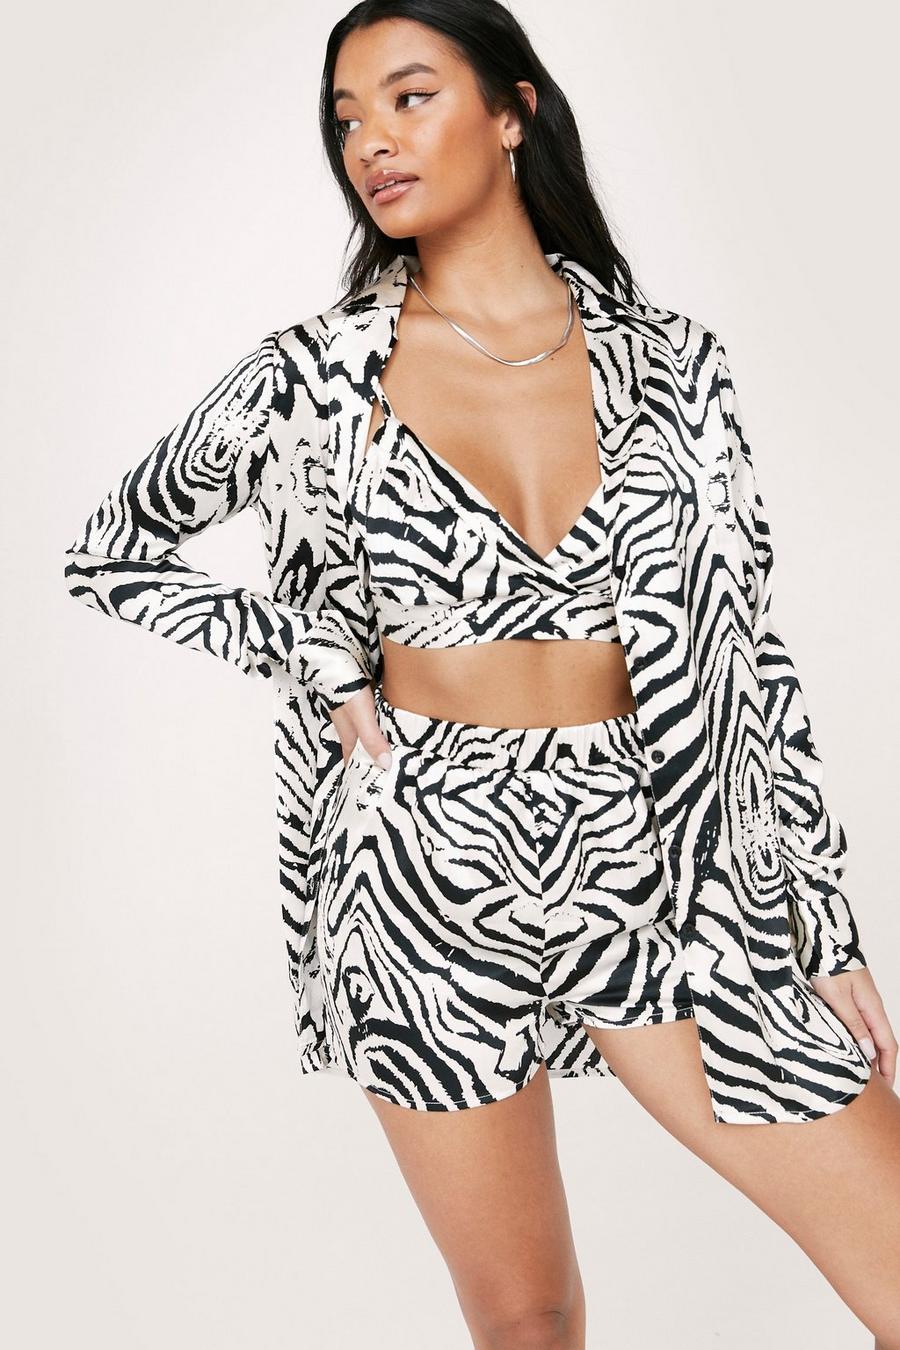 Satin Zebra Bralet Short Shirt 3 Pc Pyjama Set